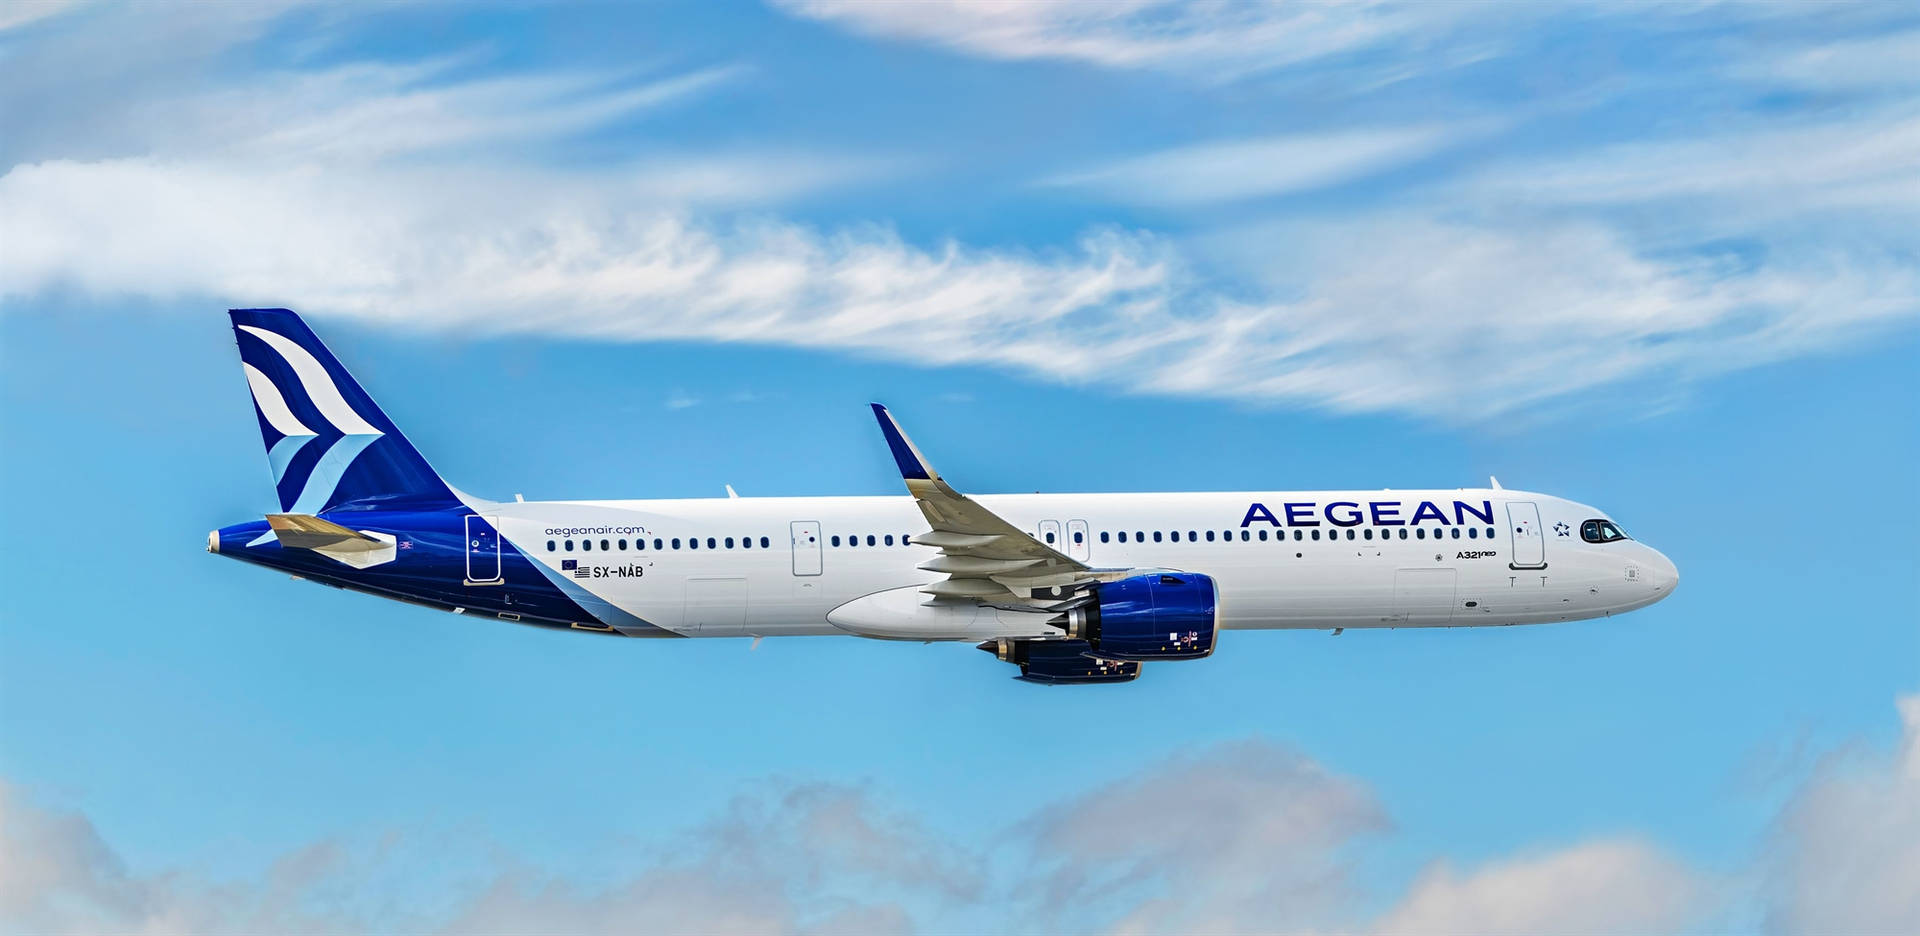 Flyvning med Aegean Airlines Airbus A321neo mellem skyerne Wallpaper